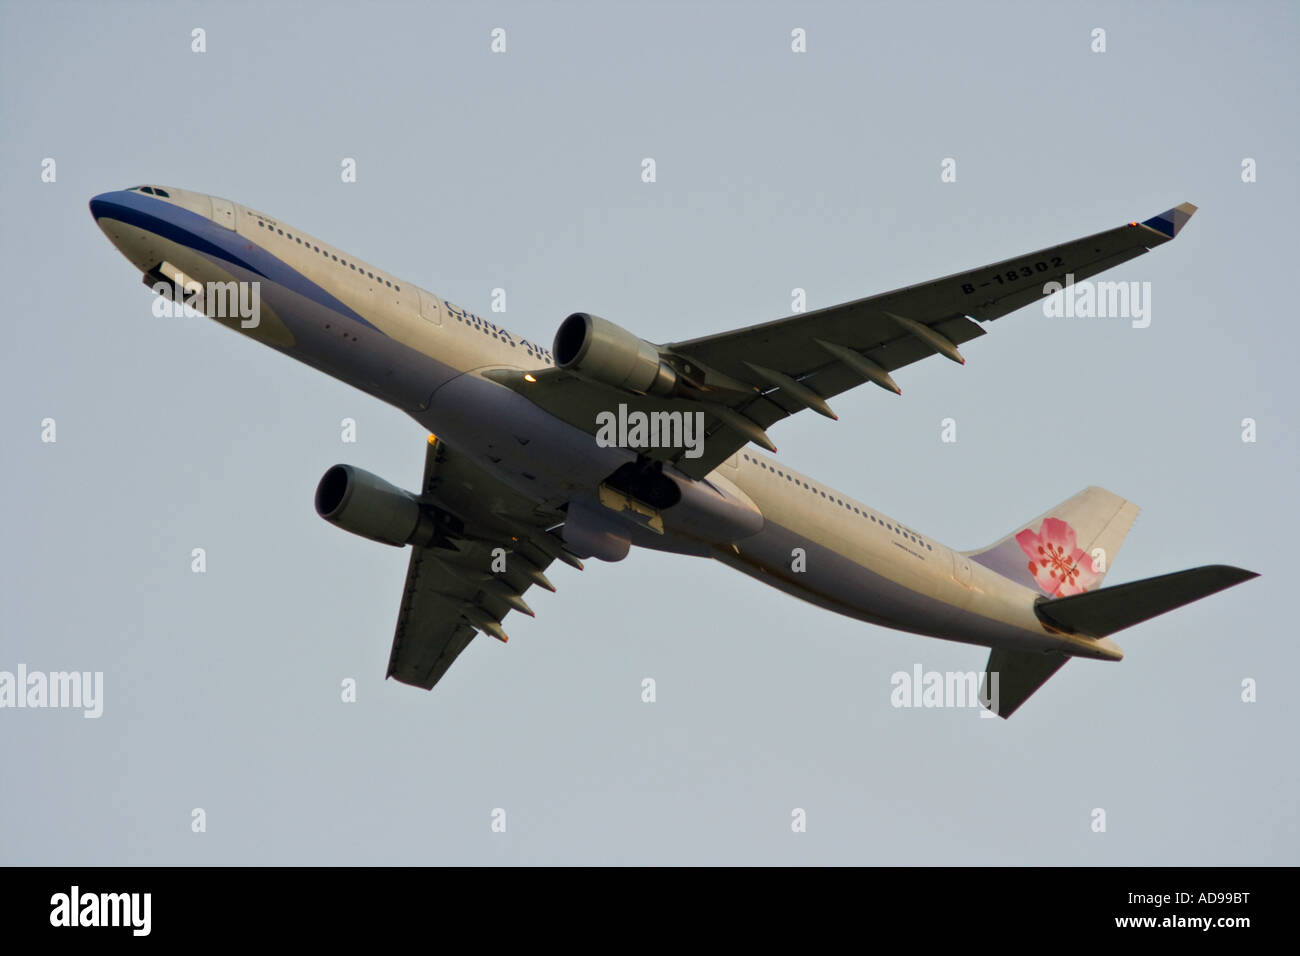 China Airlines jet de pasajeros Airbus A340 en el aire justo después del despegue Foto de stock